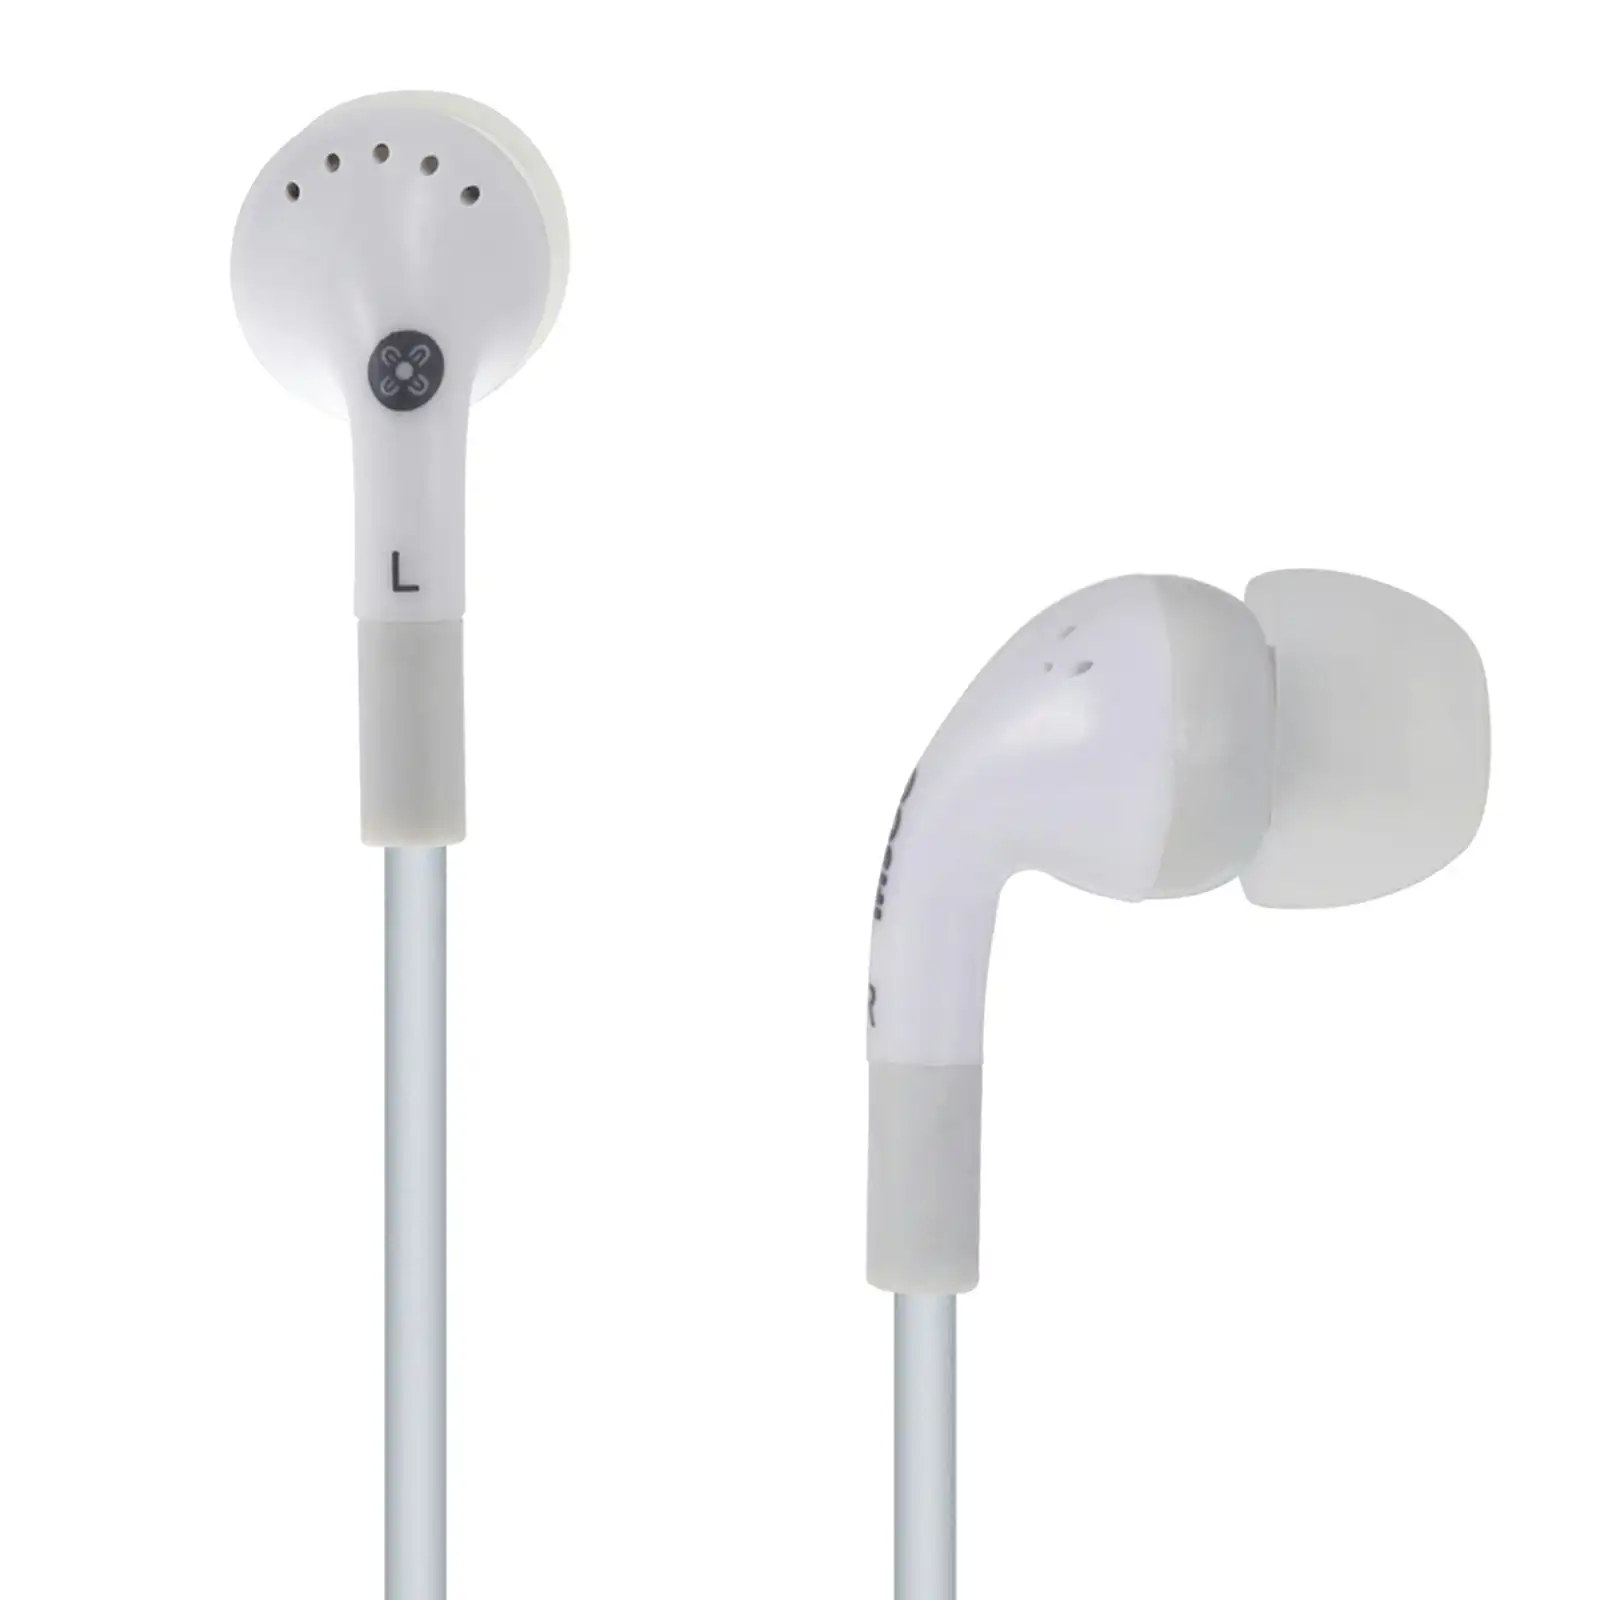 Moki Headphones Noise Isolation Silicone 3.5mm Earphones for iPhone/Android WHT